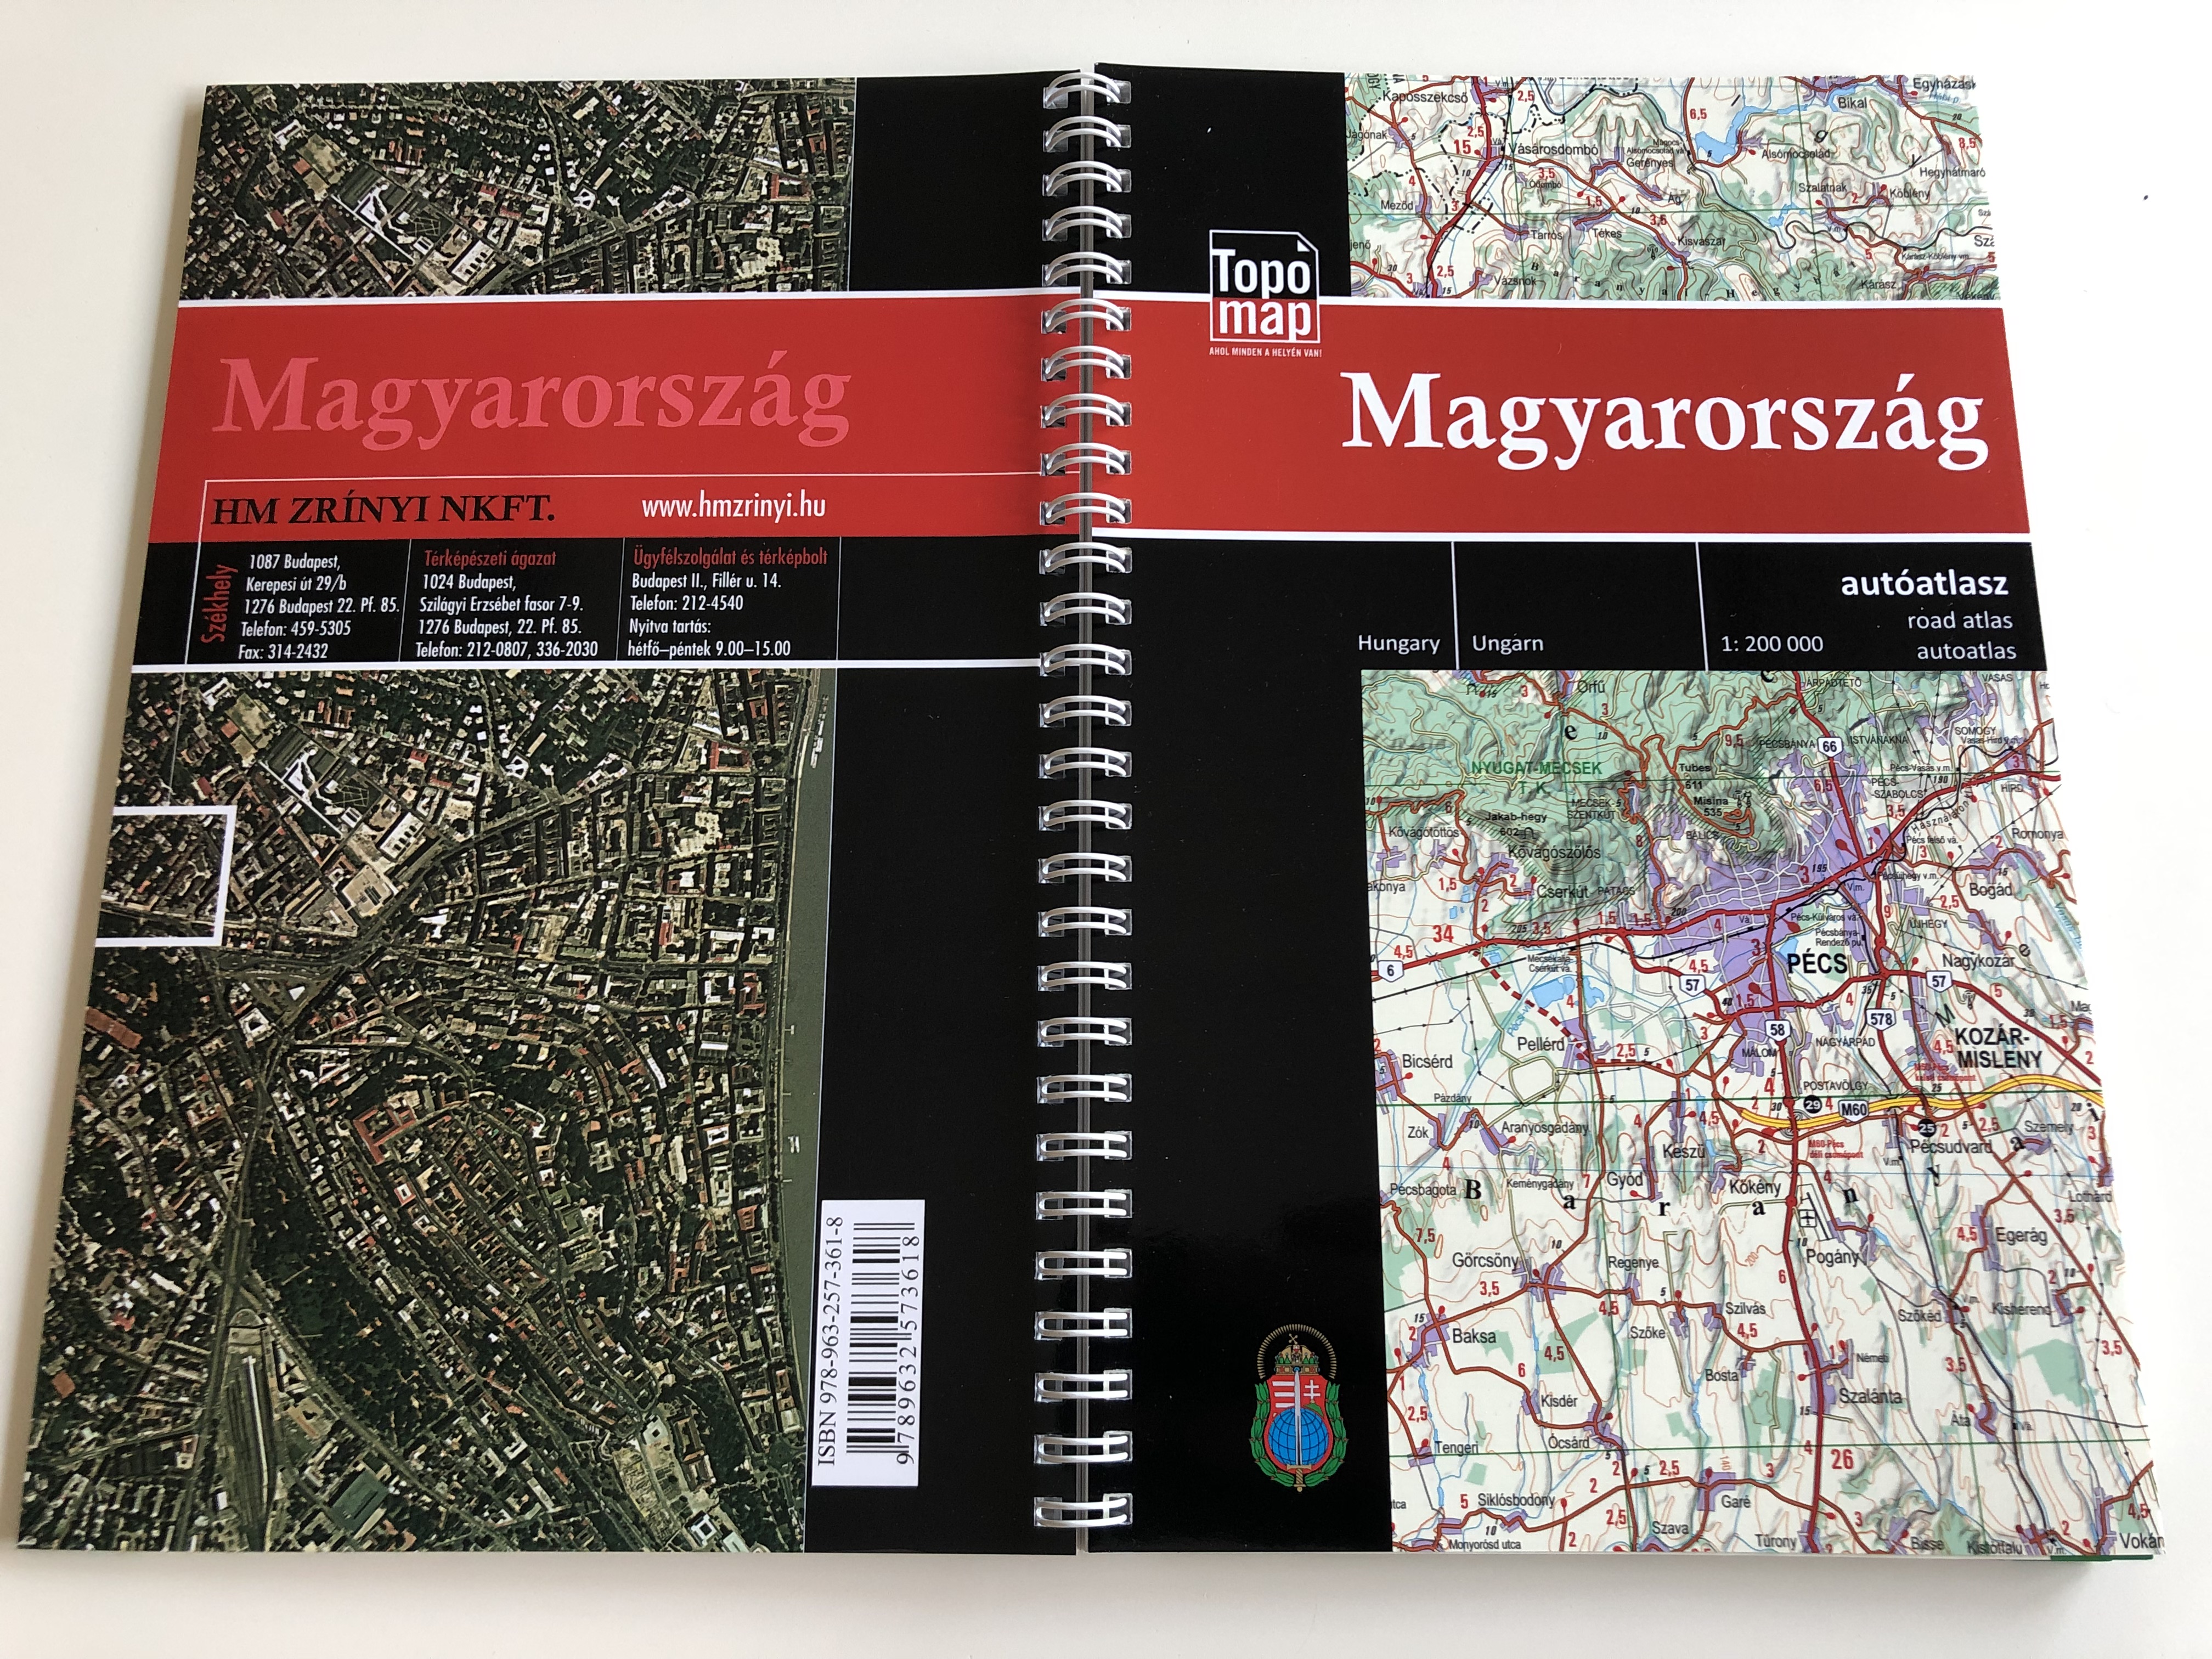 hungary-road-atlas-magyarorsz-g-aut-atlasz-ungarn-autoatlas-topomap-english-german-hungarian-road-atlas-of-hungary-1-200.000-20-.jpg